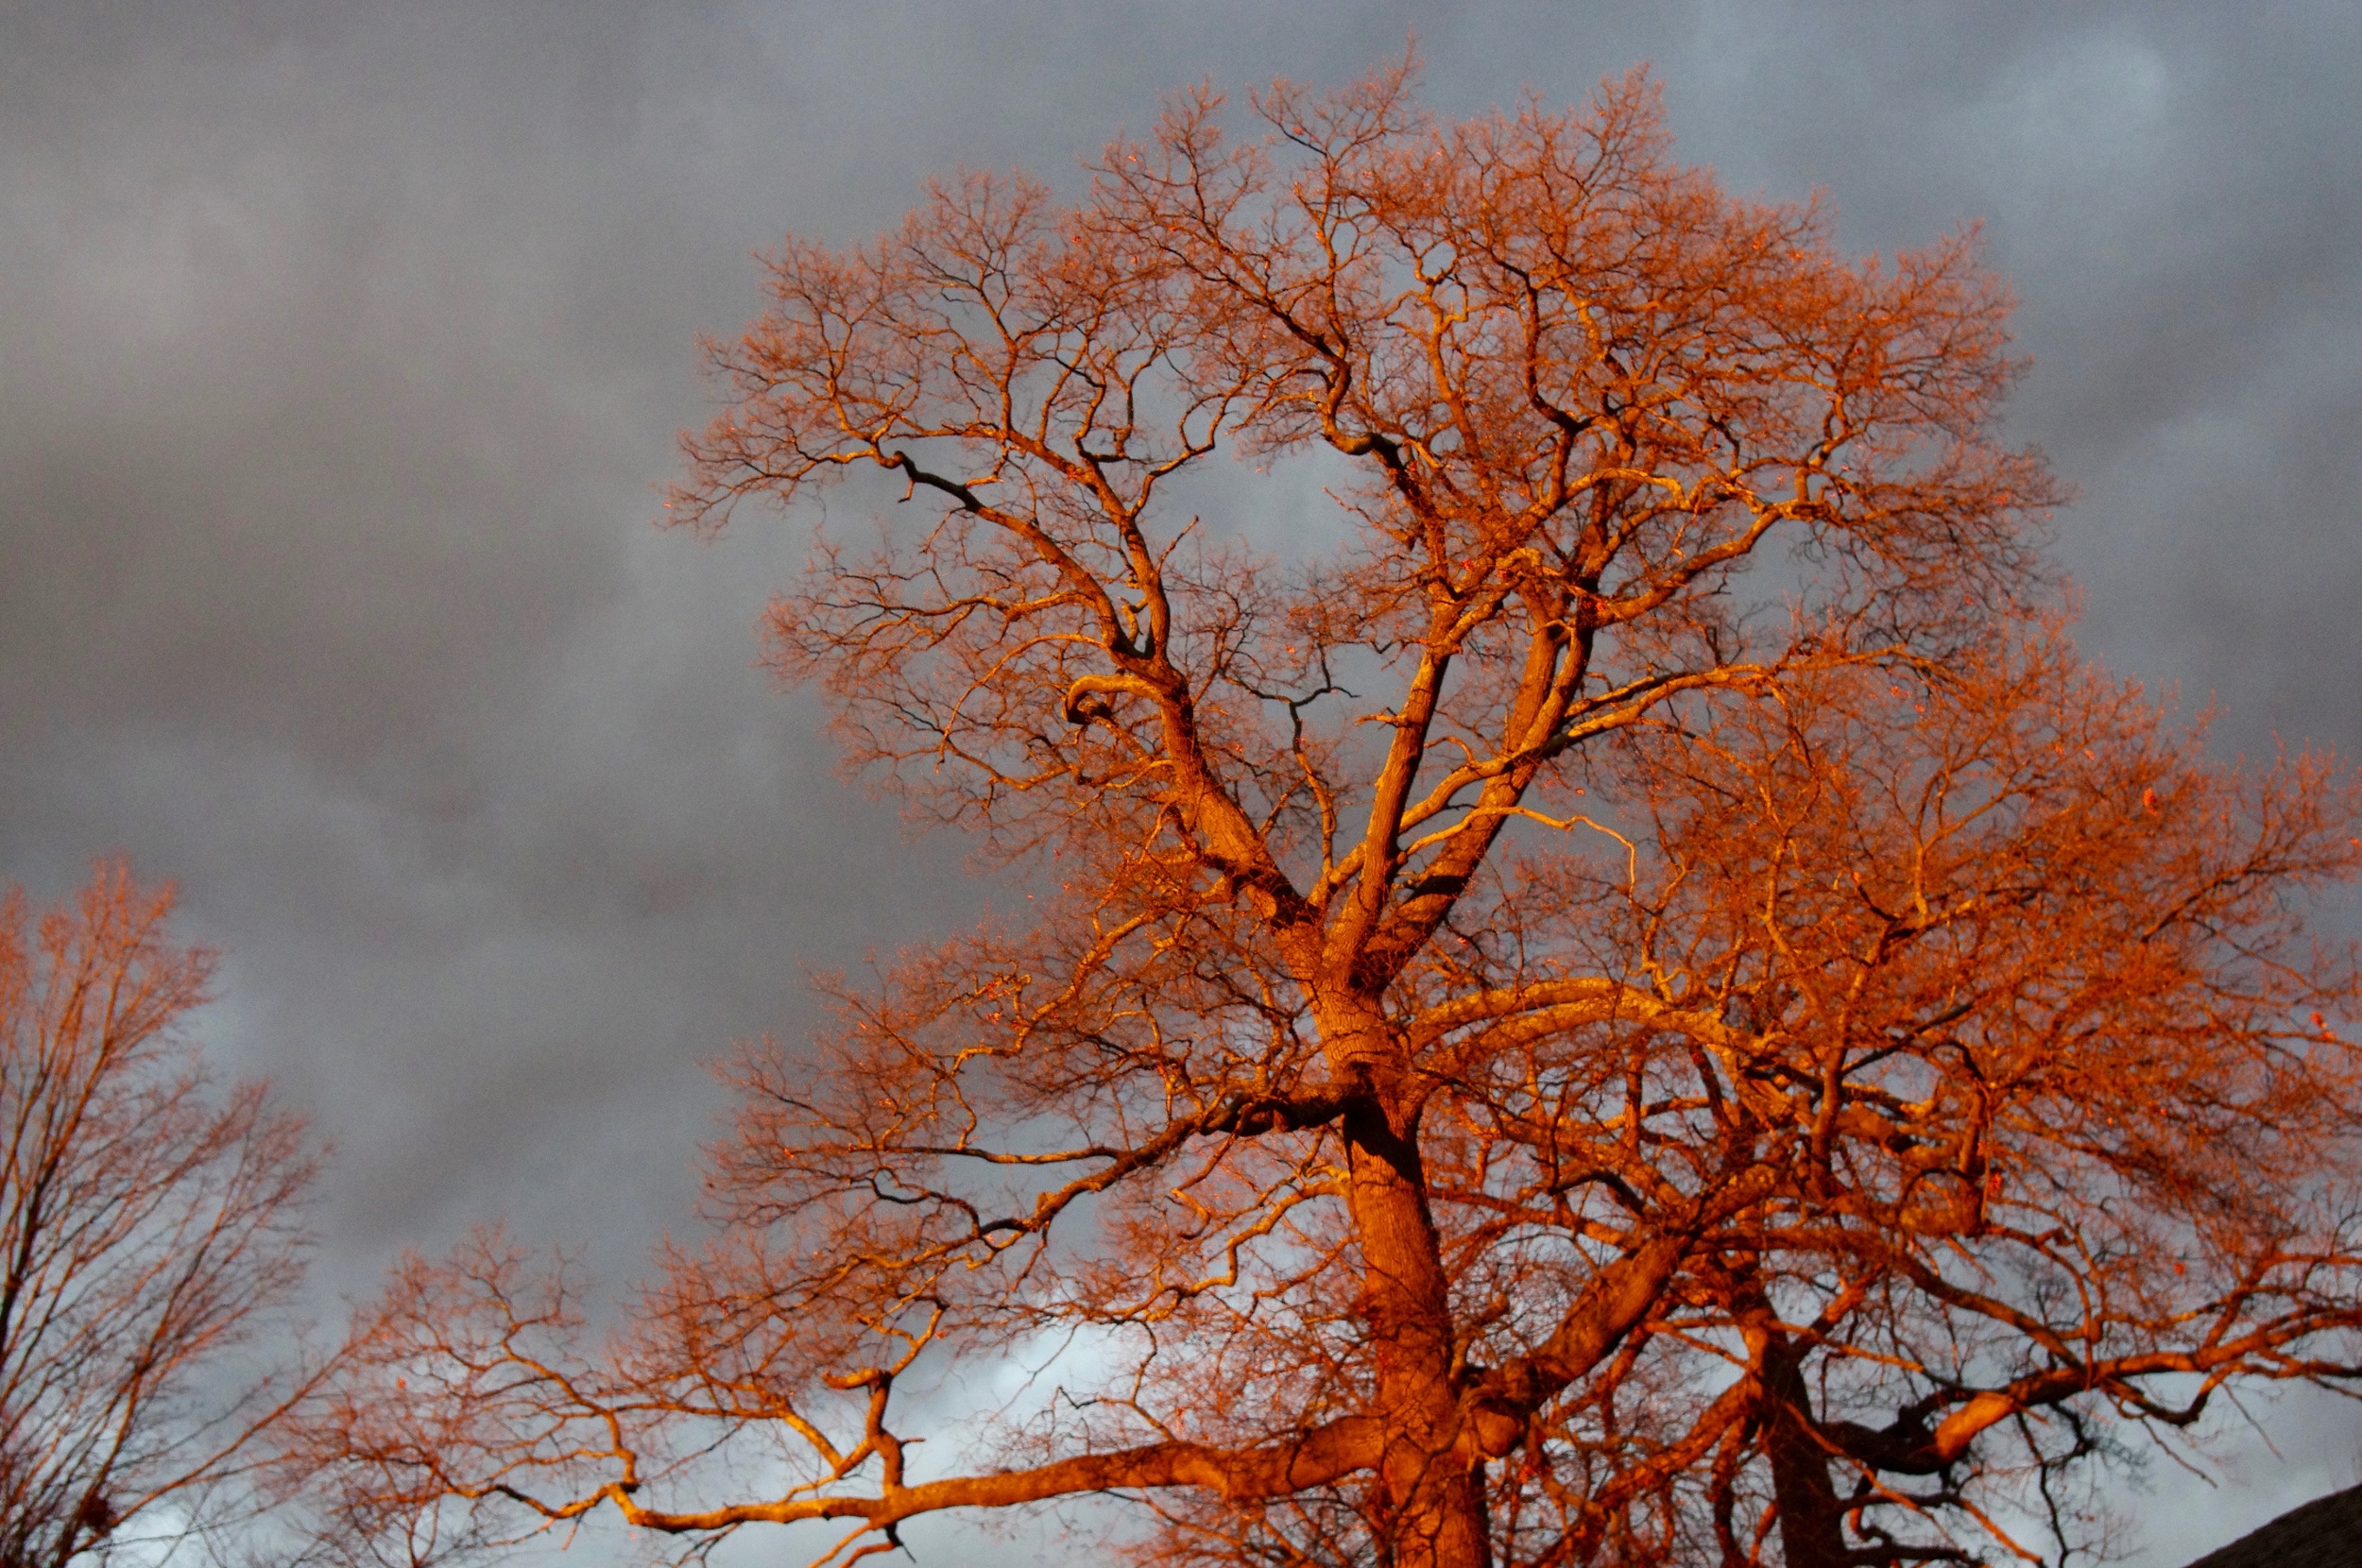 Oak tree at Sunset, Manchester, 2015